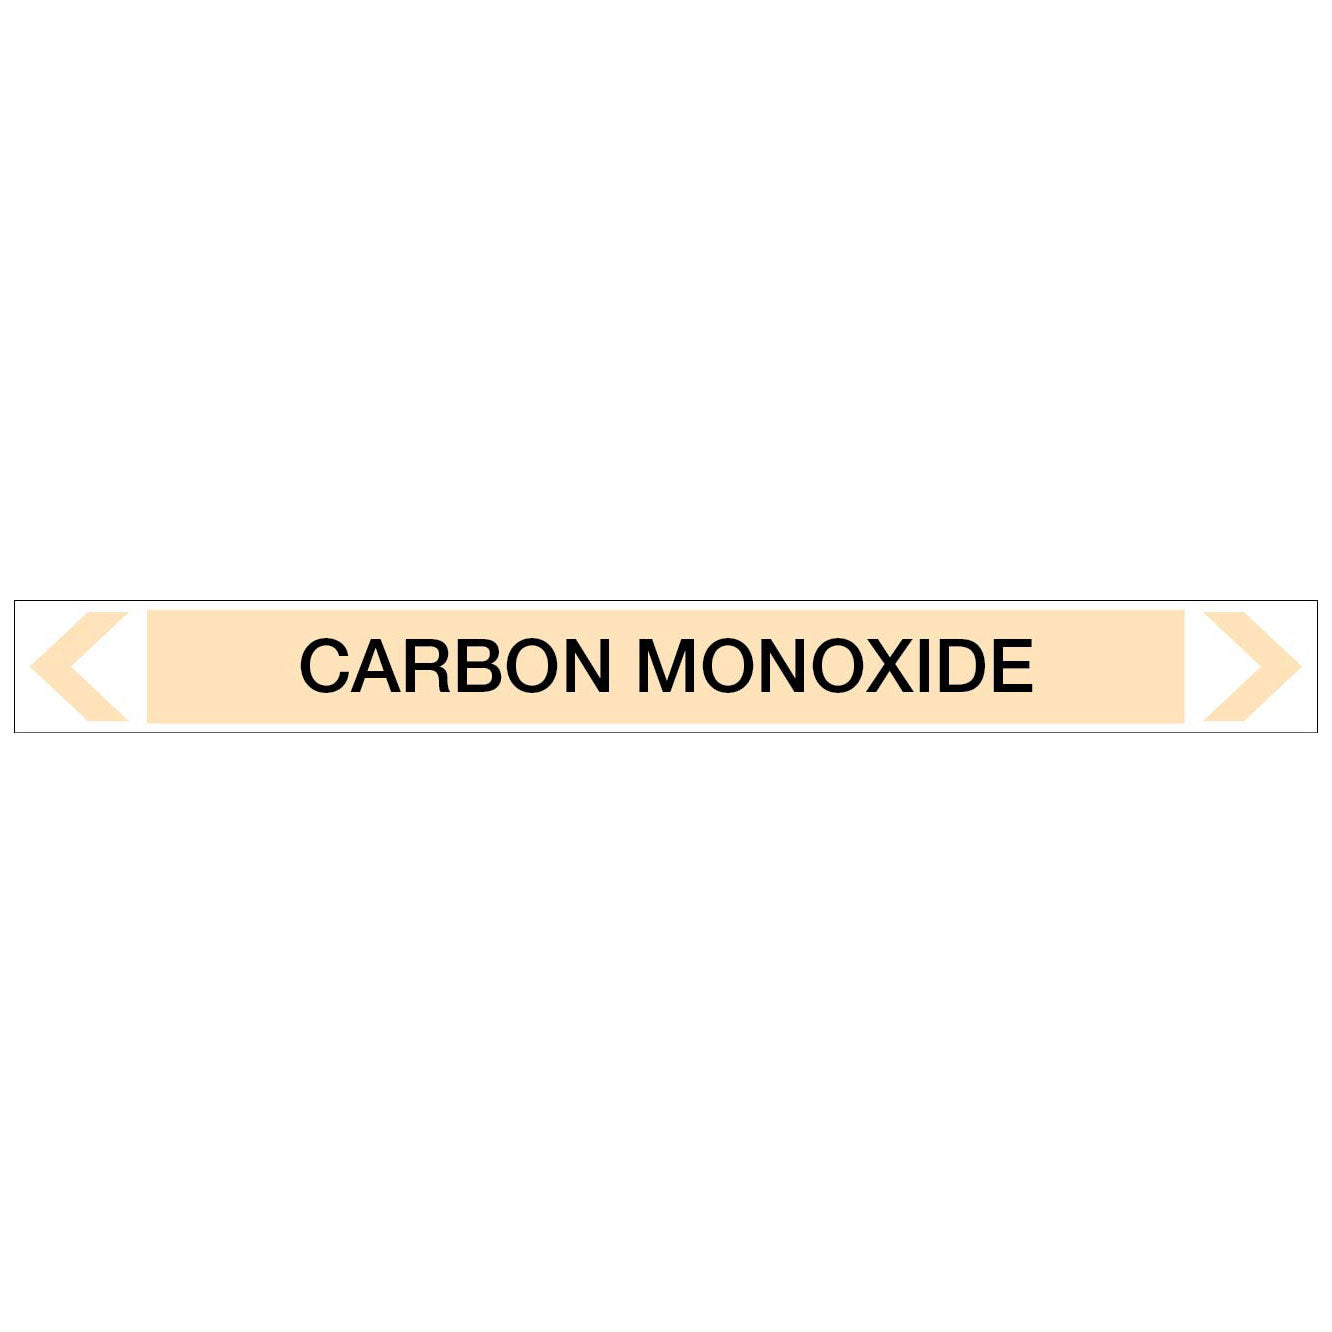 Gases - Carbon Monoxide - Pipe Marker Sticker